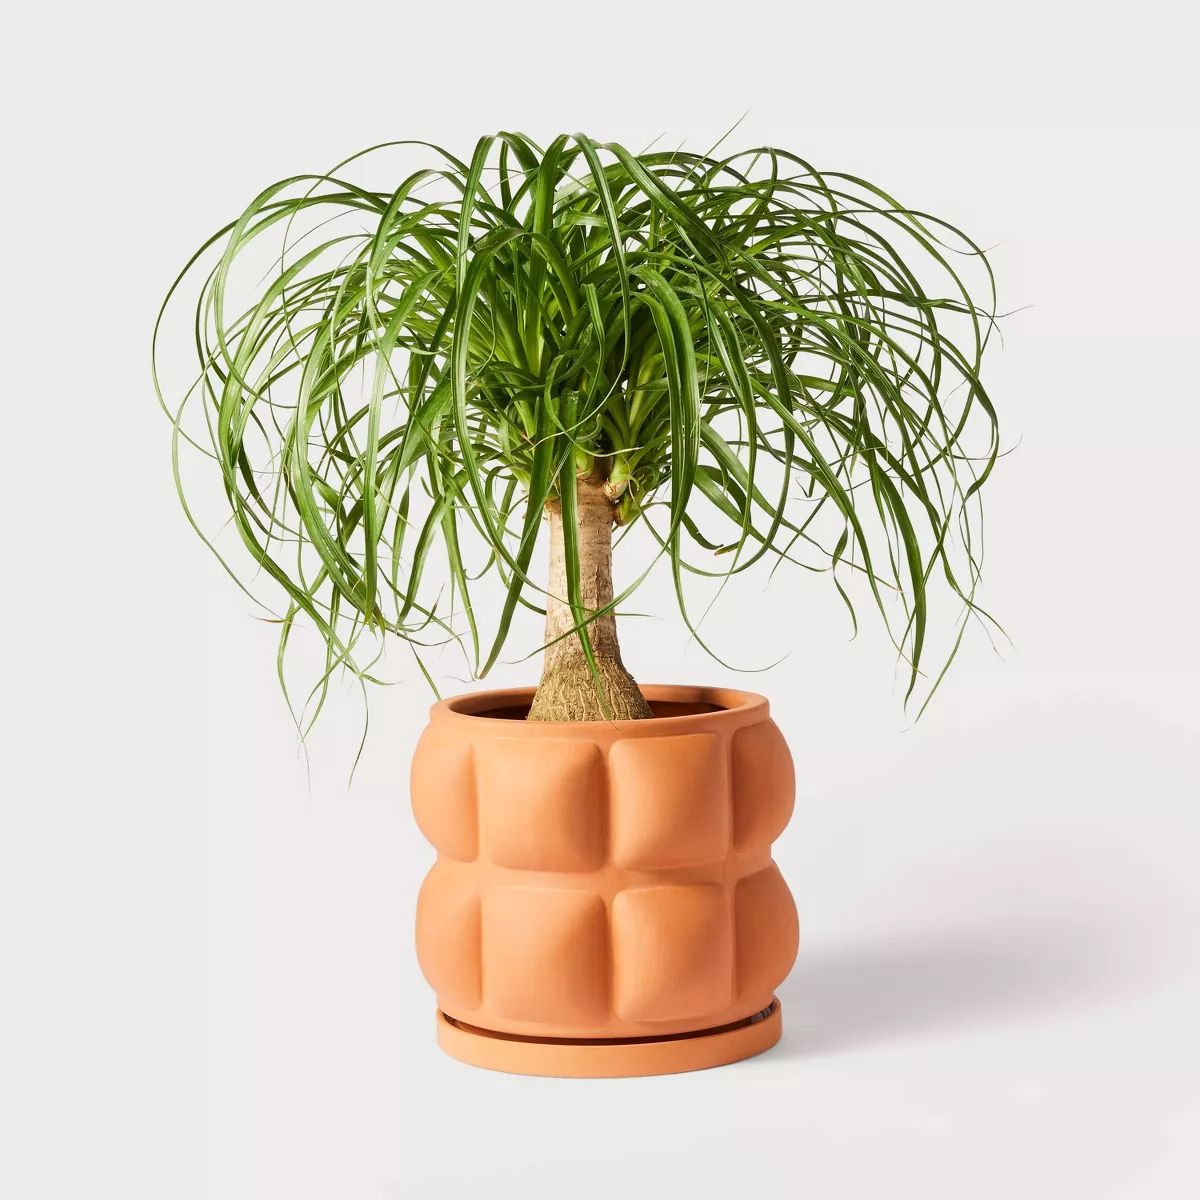 Hilton Carter for Target Terracotta Embossed Ceramic Indoor Outdoor Planter Pot Orange | Target